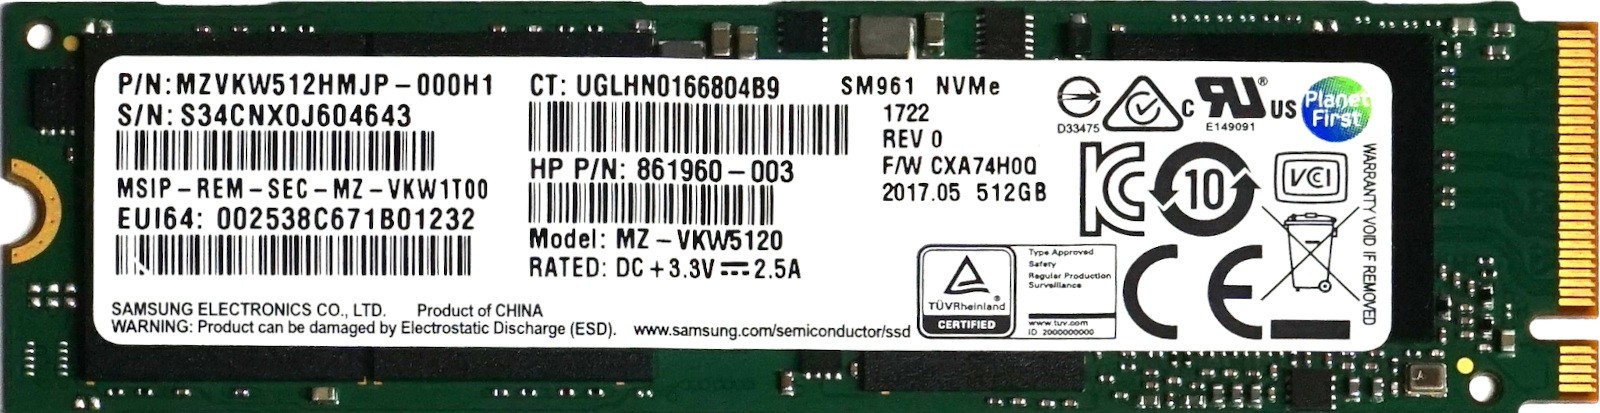 HP (861960-003) 512GB Samsung SM961 NVMe (M.2 2280) SSD